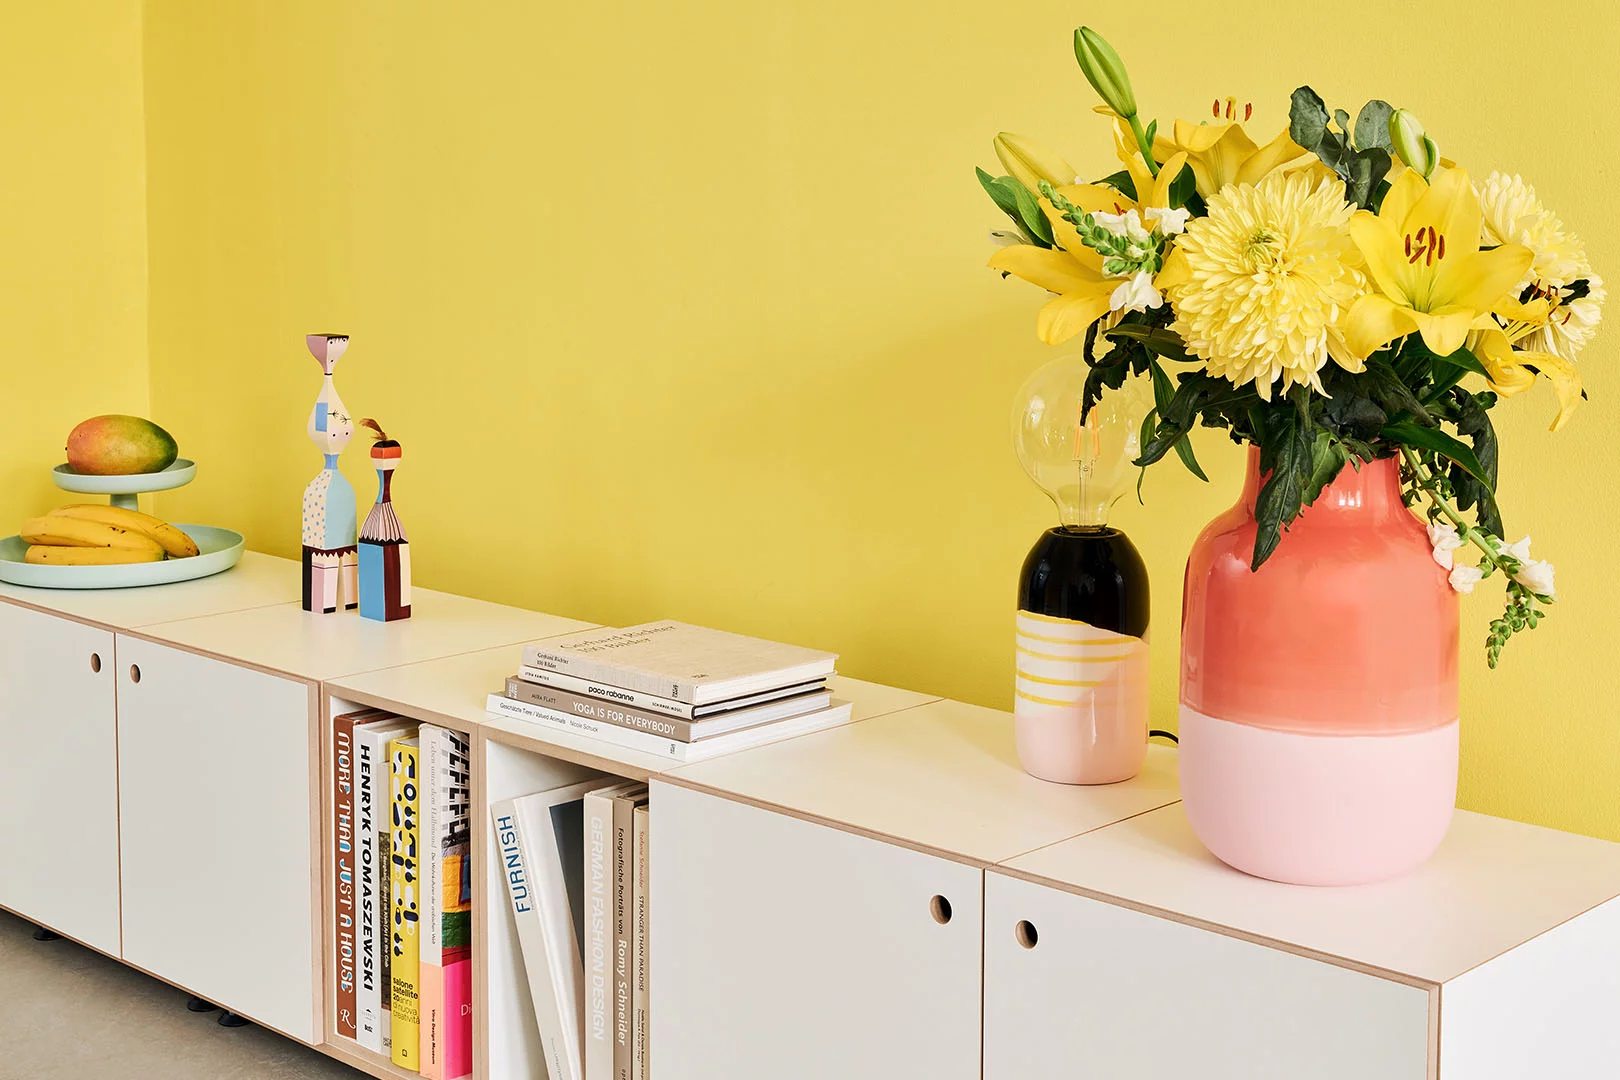 Kategorien, Lowboard, Wand, Bücher, Vase, Blumen, Obst, Lampe, gelb, pink, bunt, 3by2